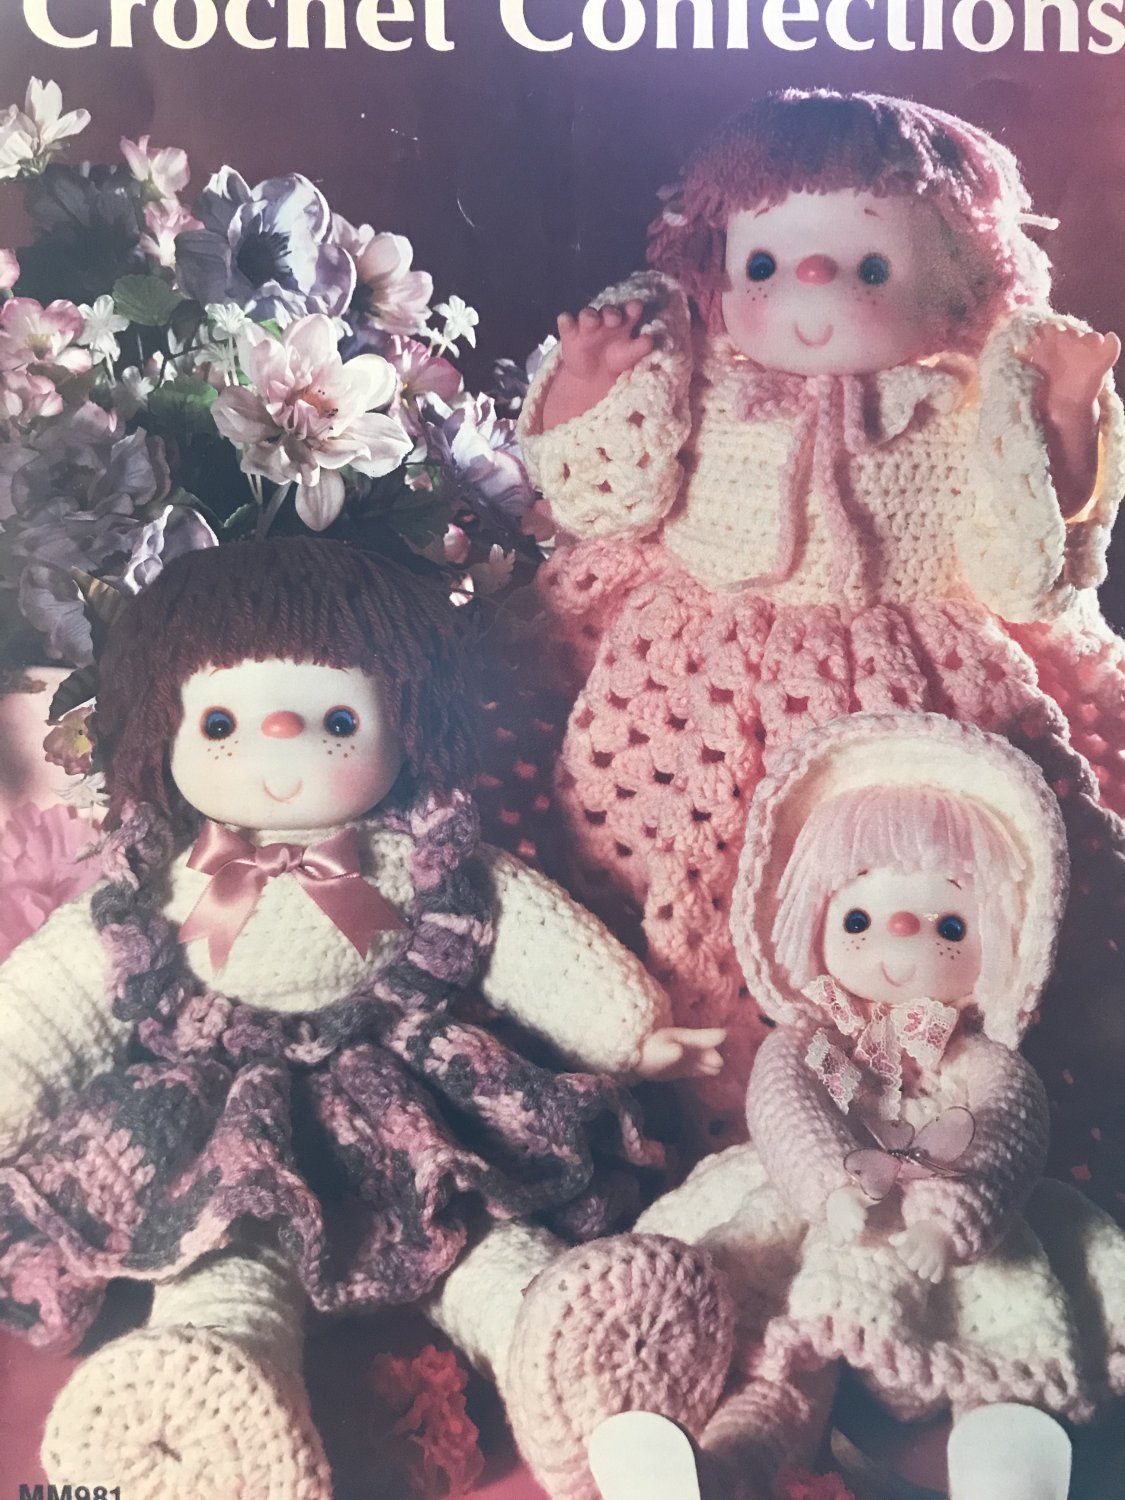 Crochet Confections Soft Sculpture Dolls to Crochet Pattern MM981